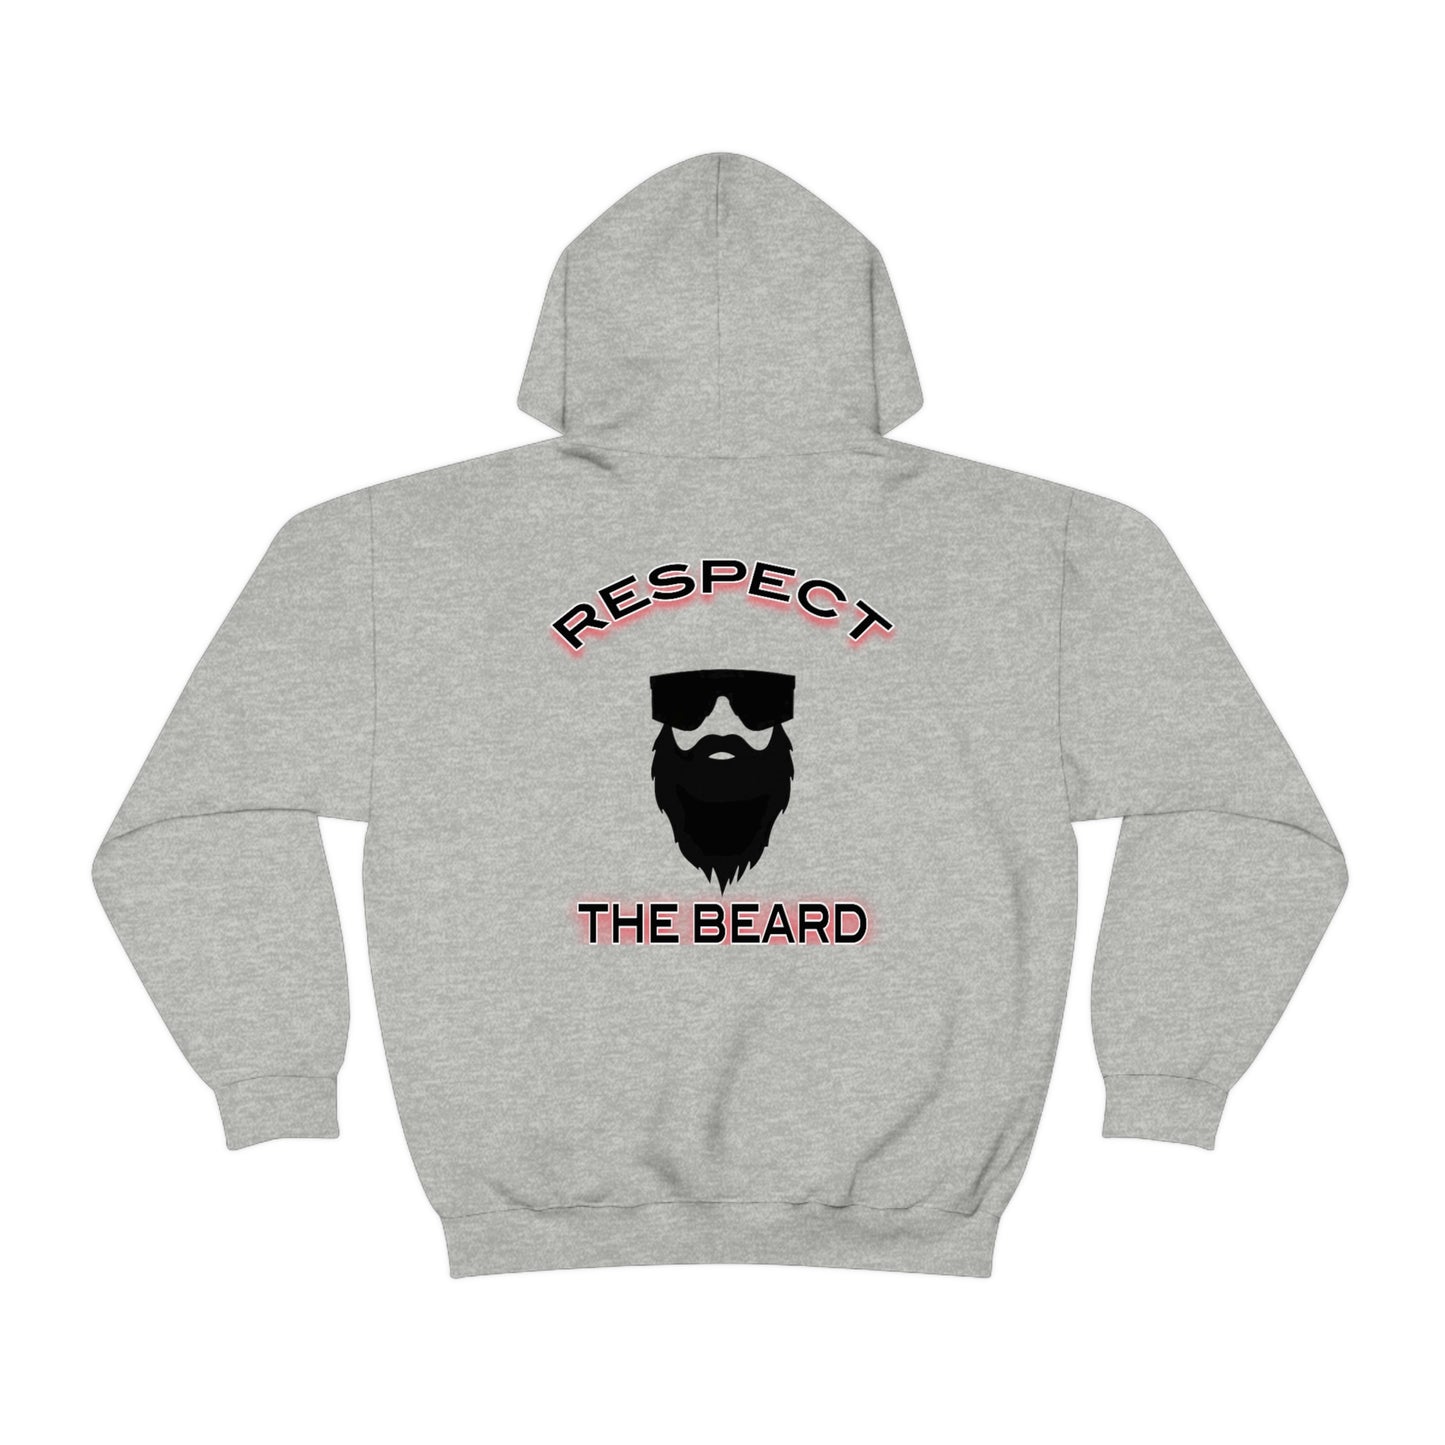 Respect The Beard Hoodie - Backwoods Branding Co.